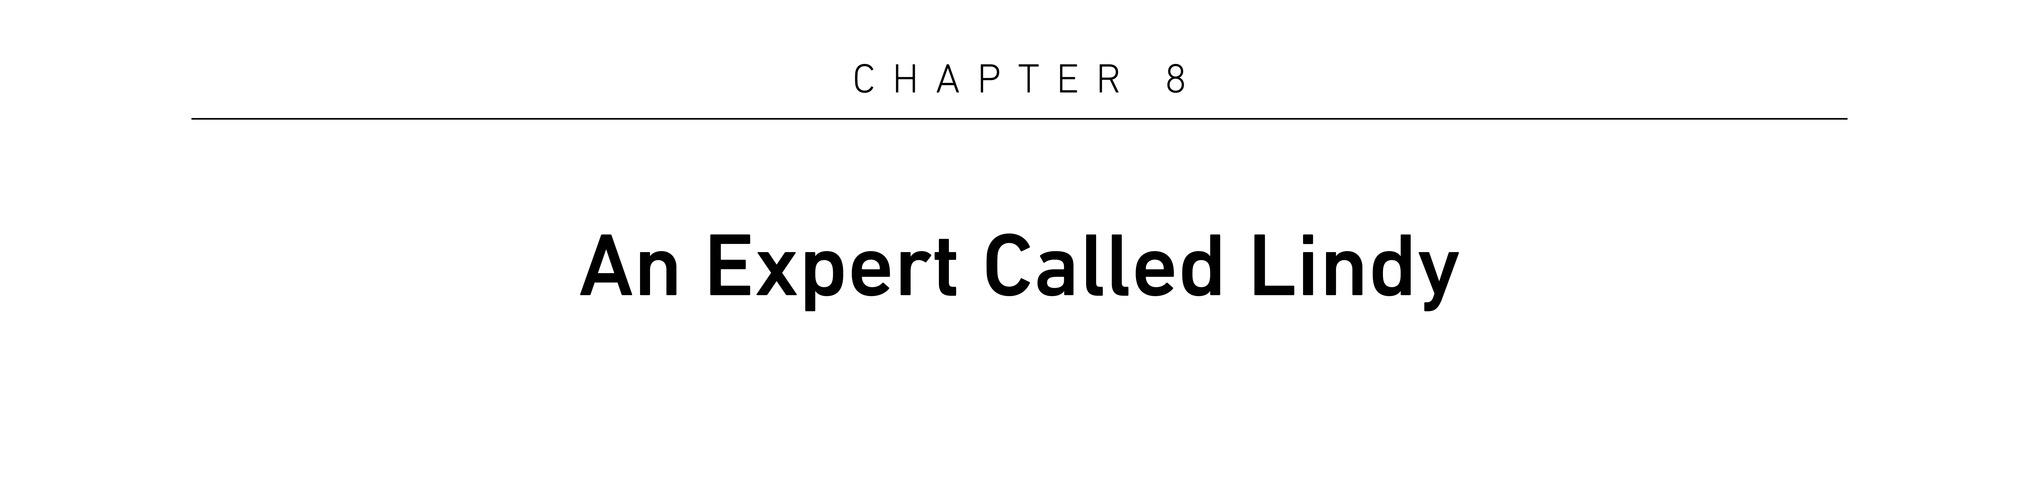 Chapter 8 An Expert Called Lindy